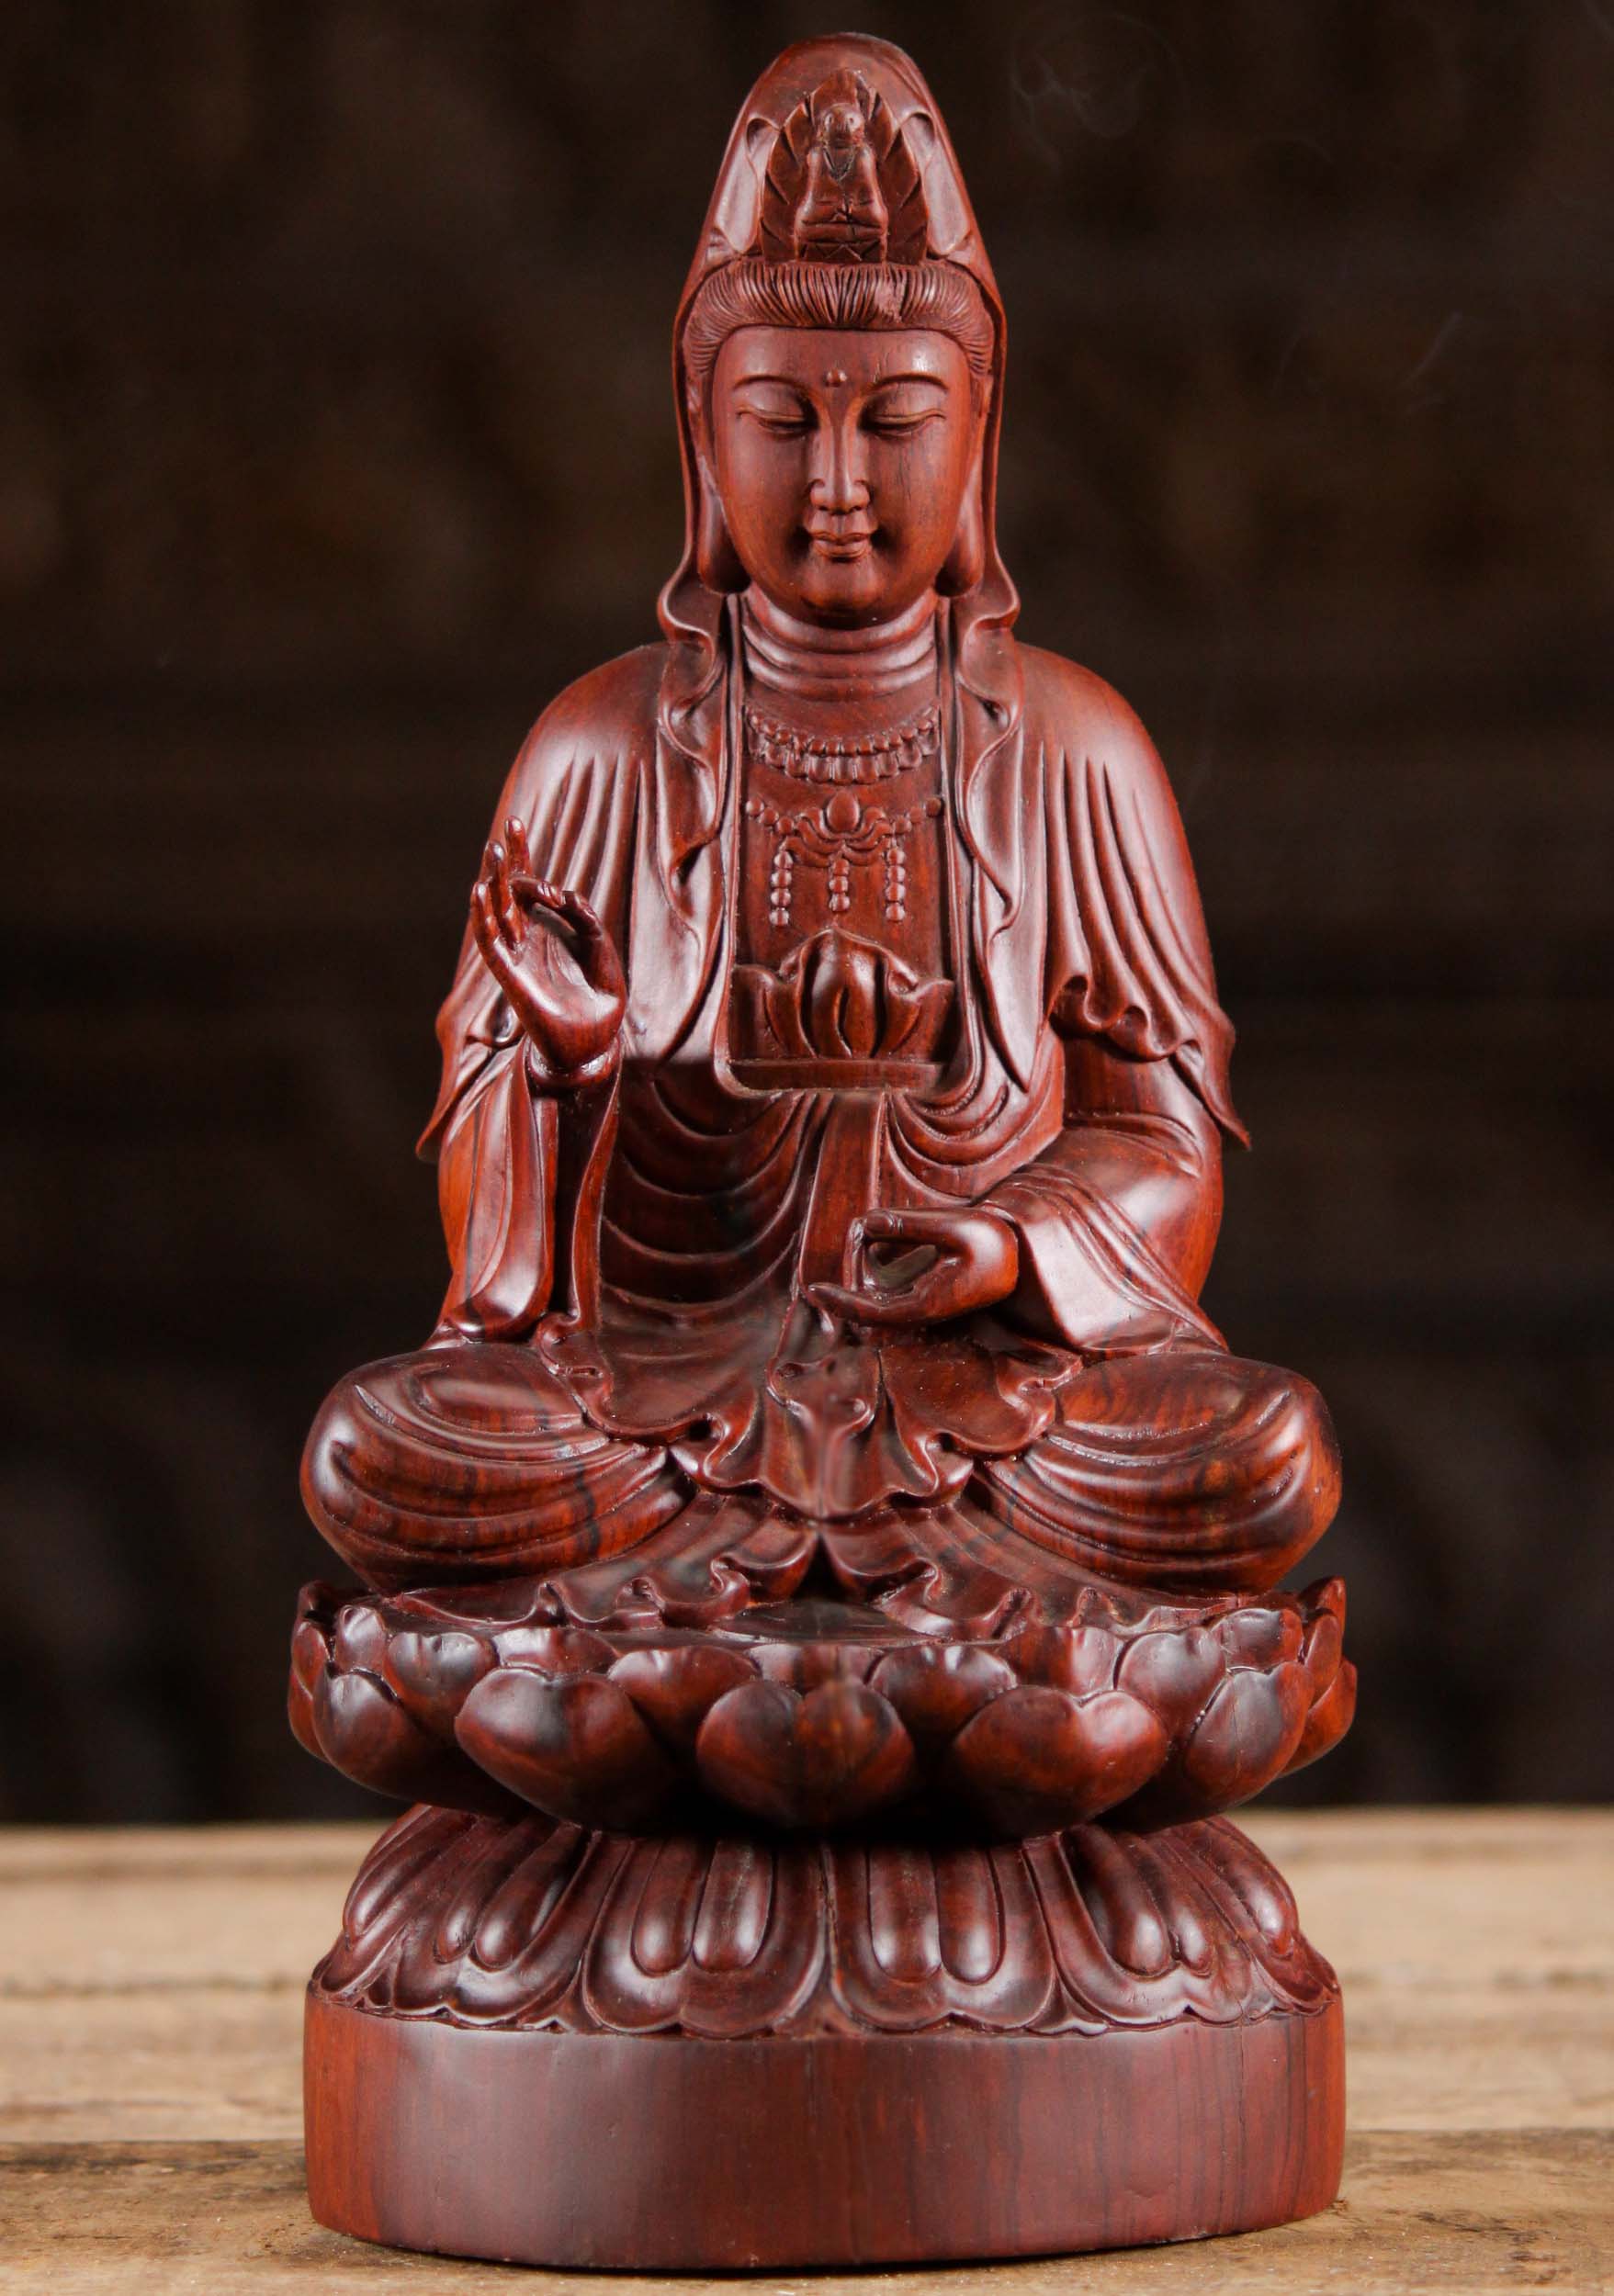 Stone Kuan-Yin in Meditation Pose on Lotus Statue